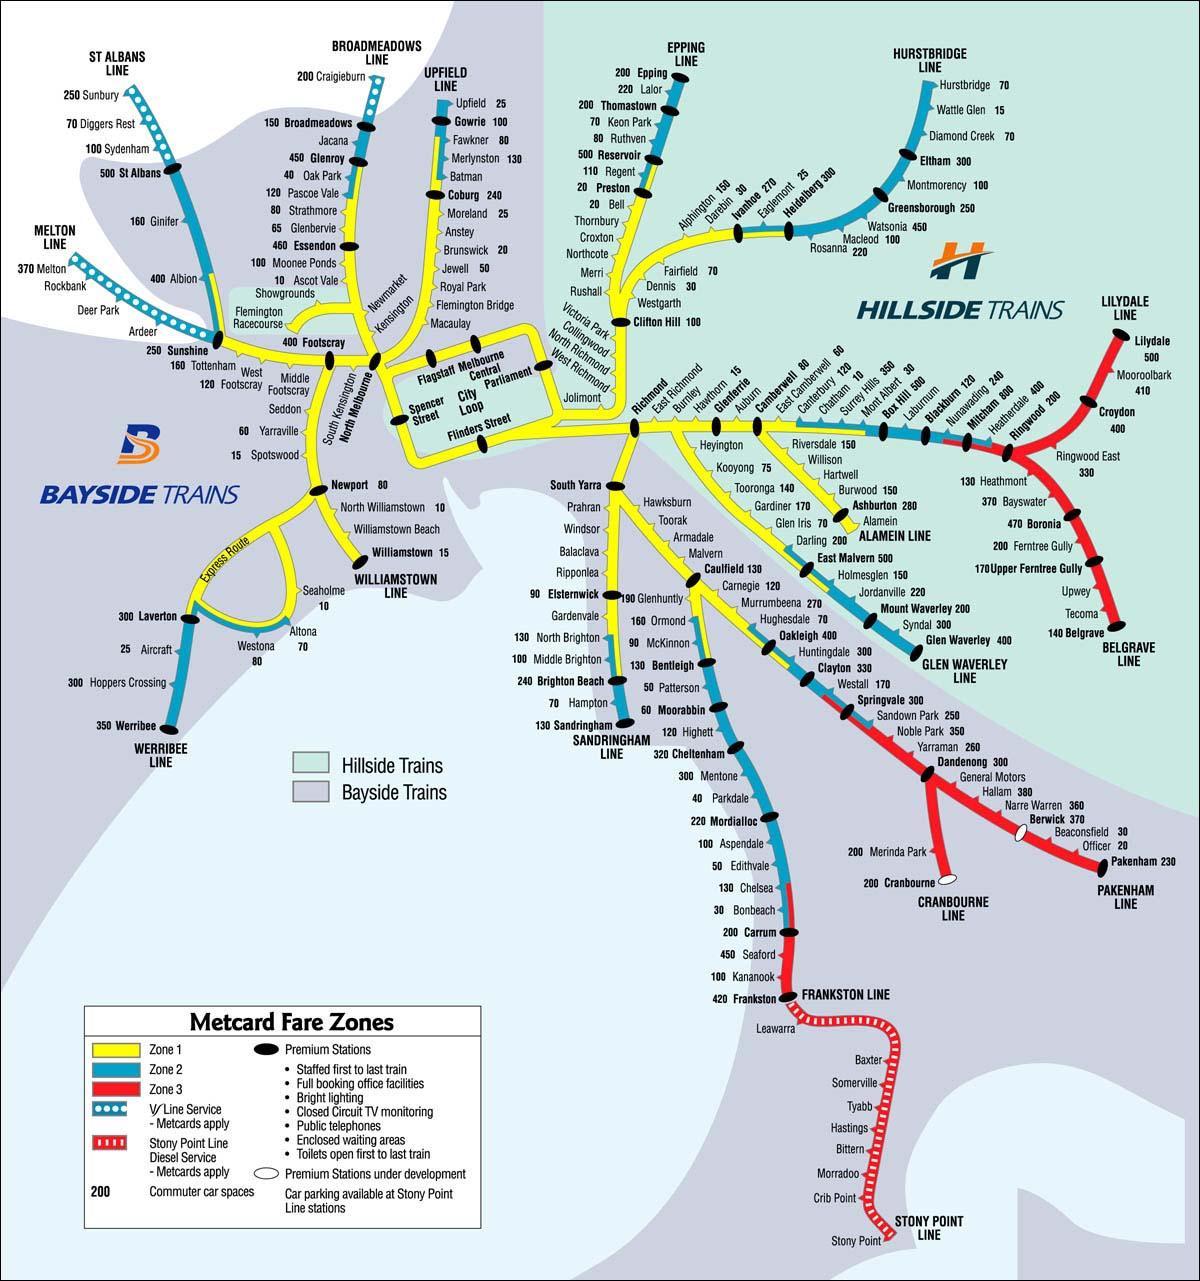 मेलबर्न रेलवे स्टेशन का नक्शा